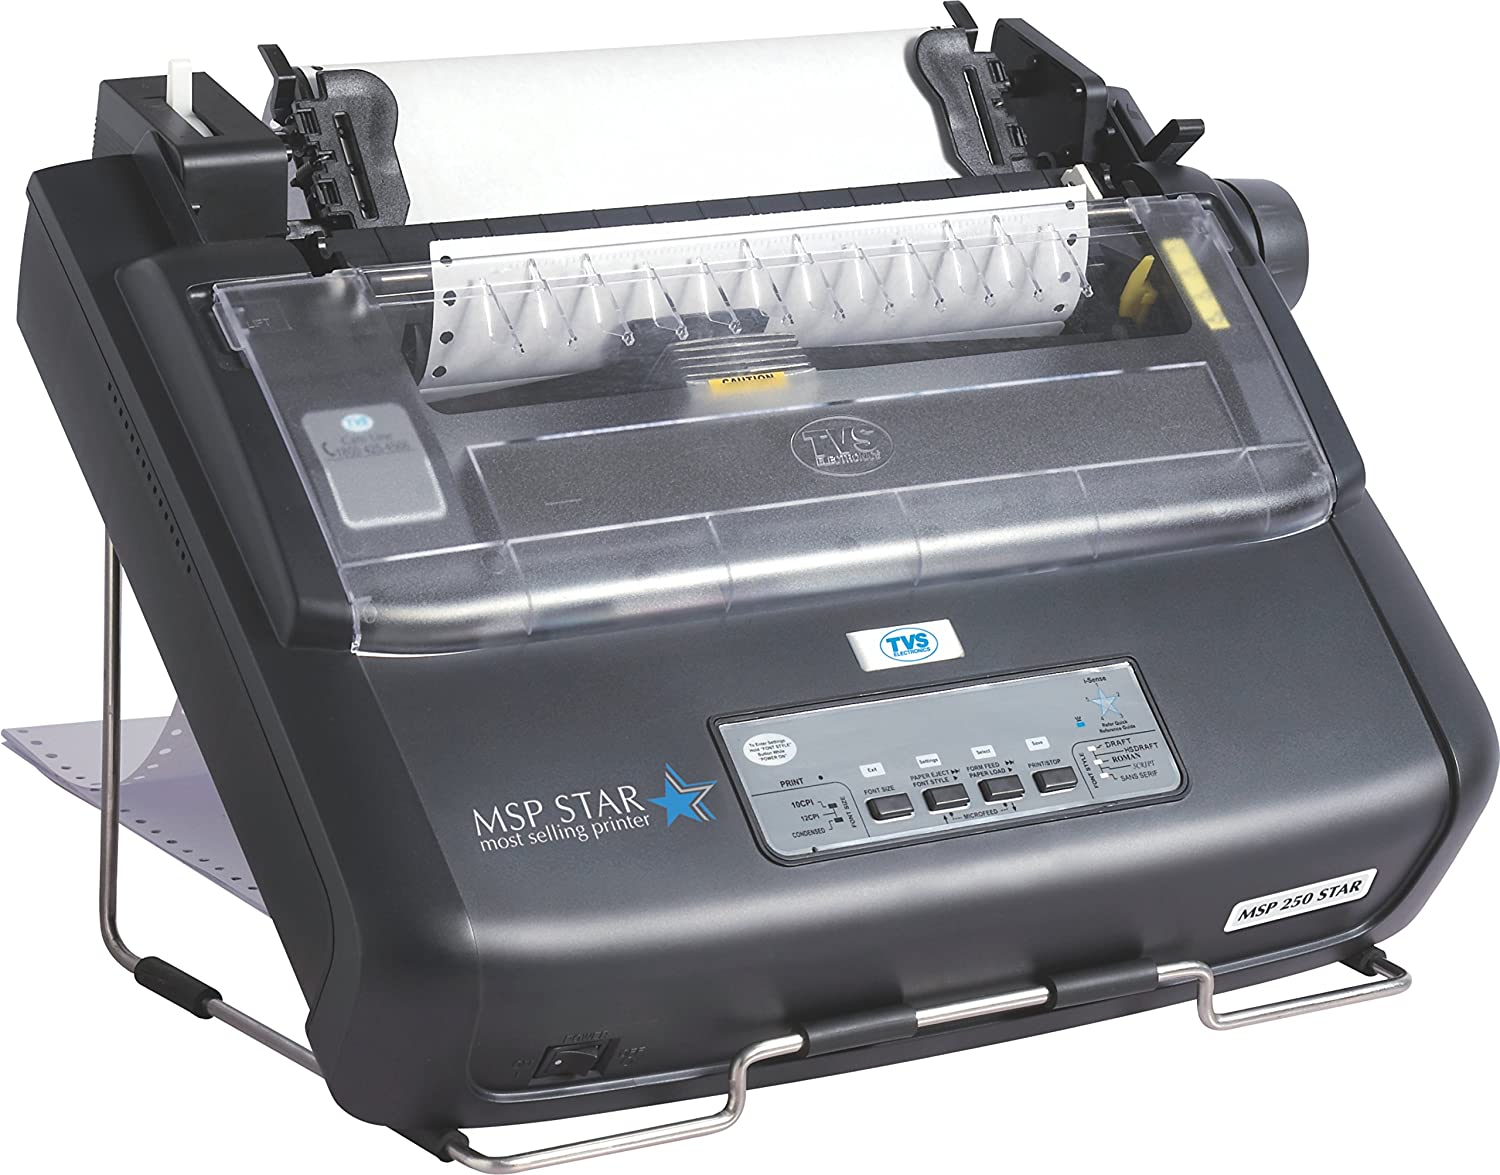 Tvs MSP 250 Monochrome Dot Matrix Printer-Printers, Copiers & Fax Machines-dealsplant